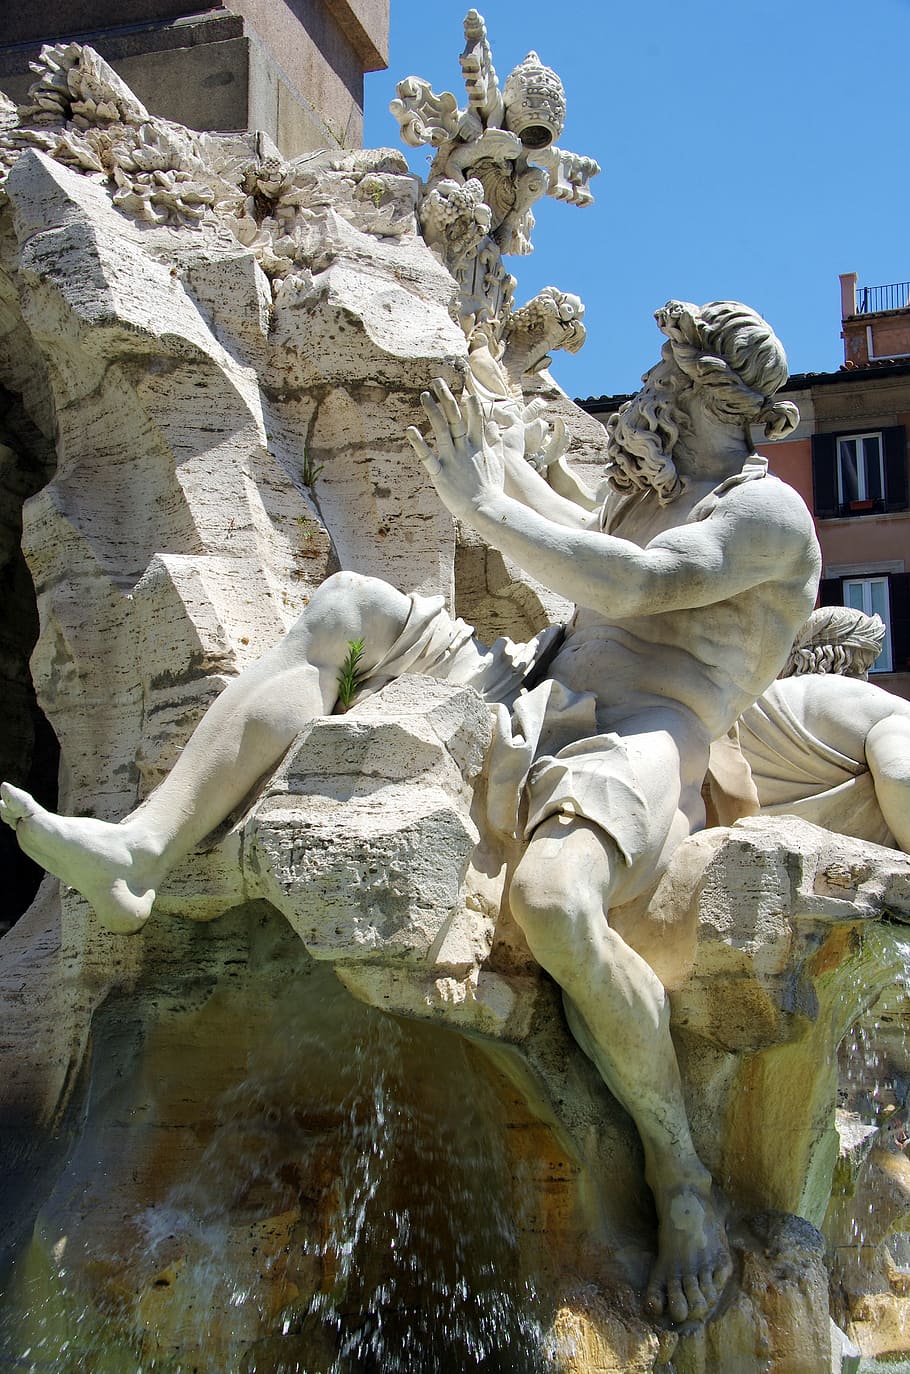 Italia, Roma, Plazza del Popolo, fuente, Neptuno, estatua, mármol, monumento histórico, escultura, arte y artesanía